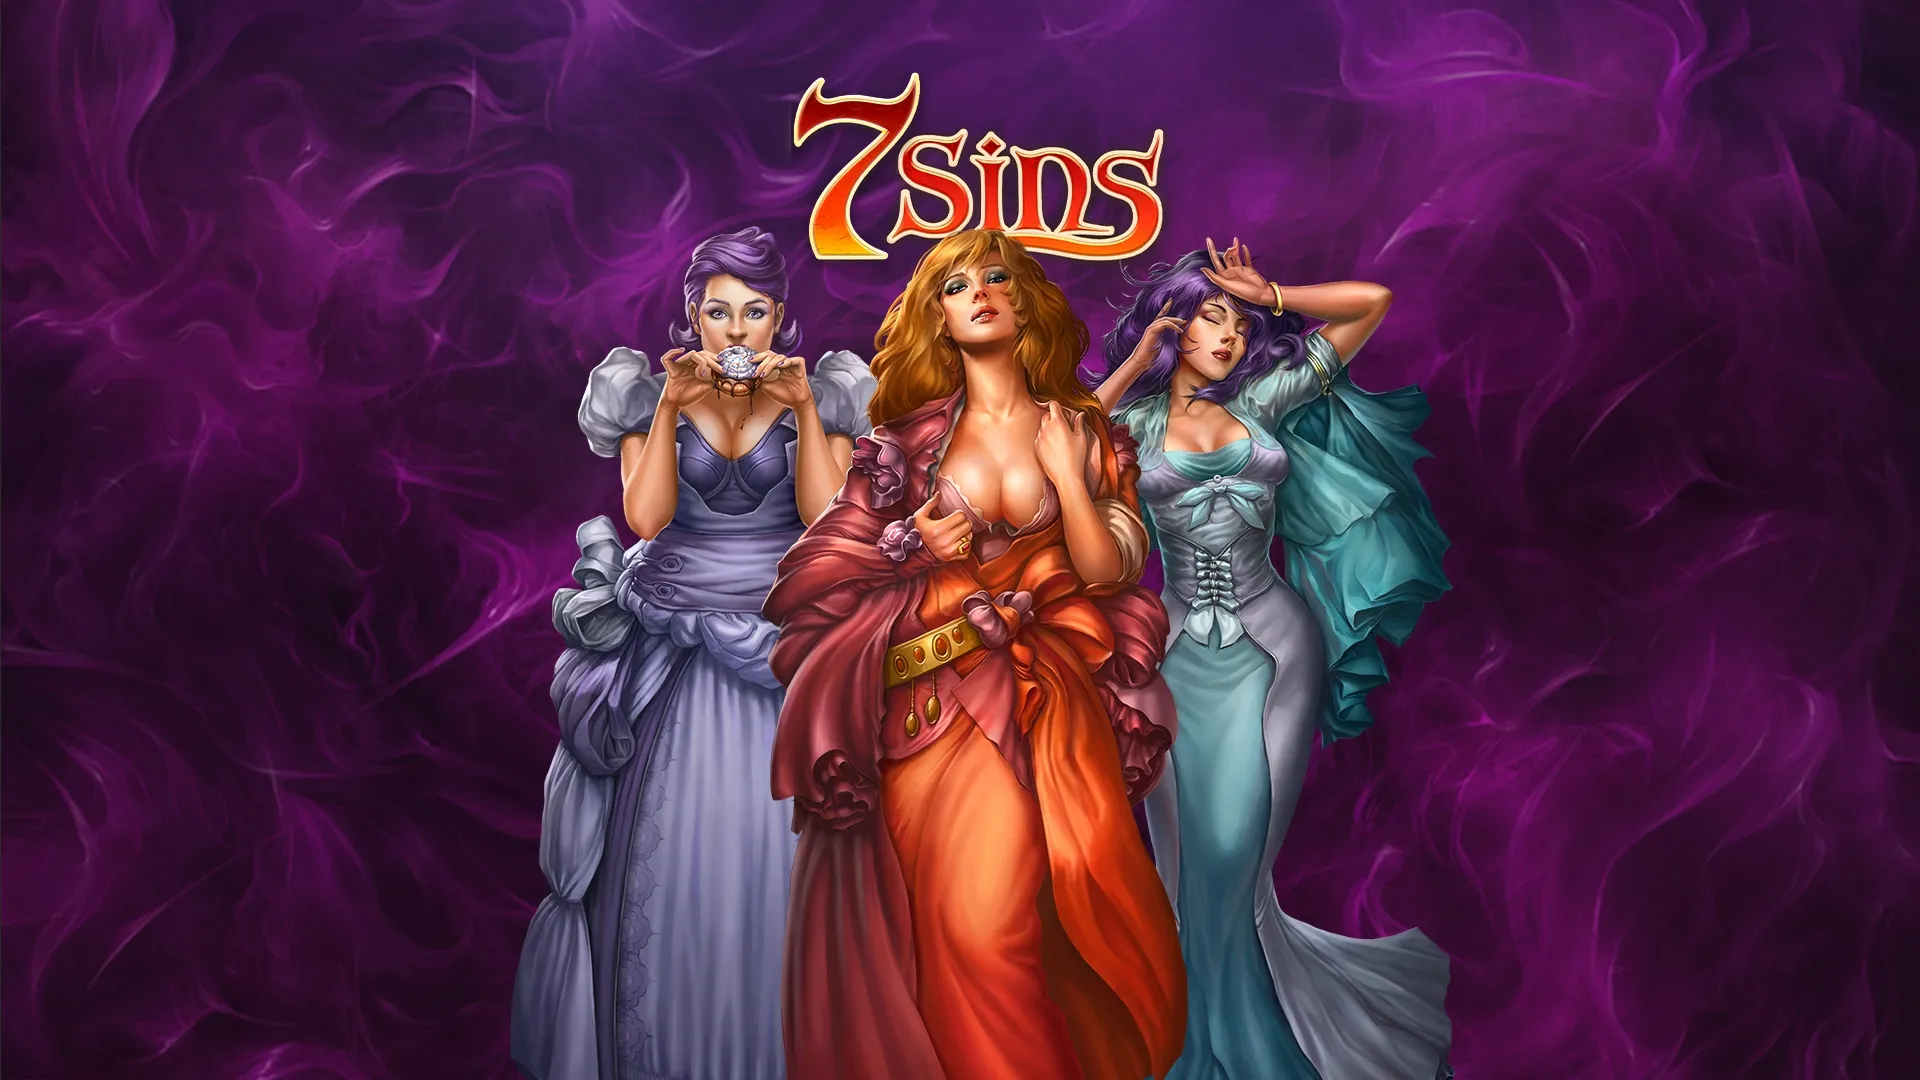 7 Sins slot cover image